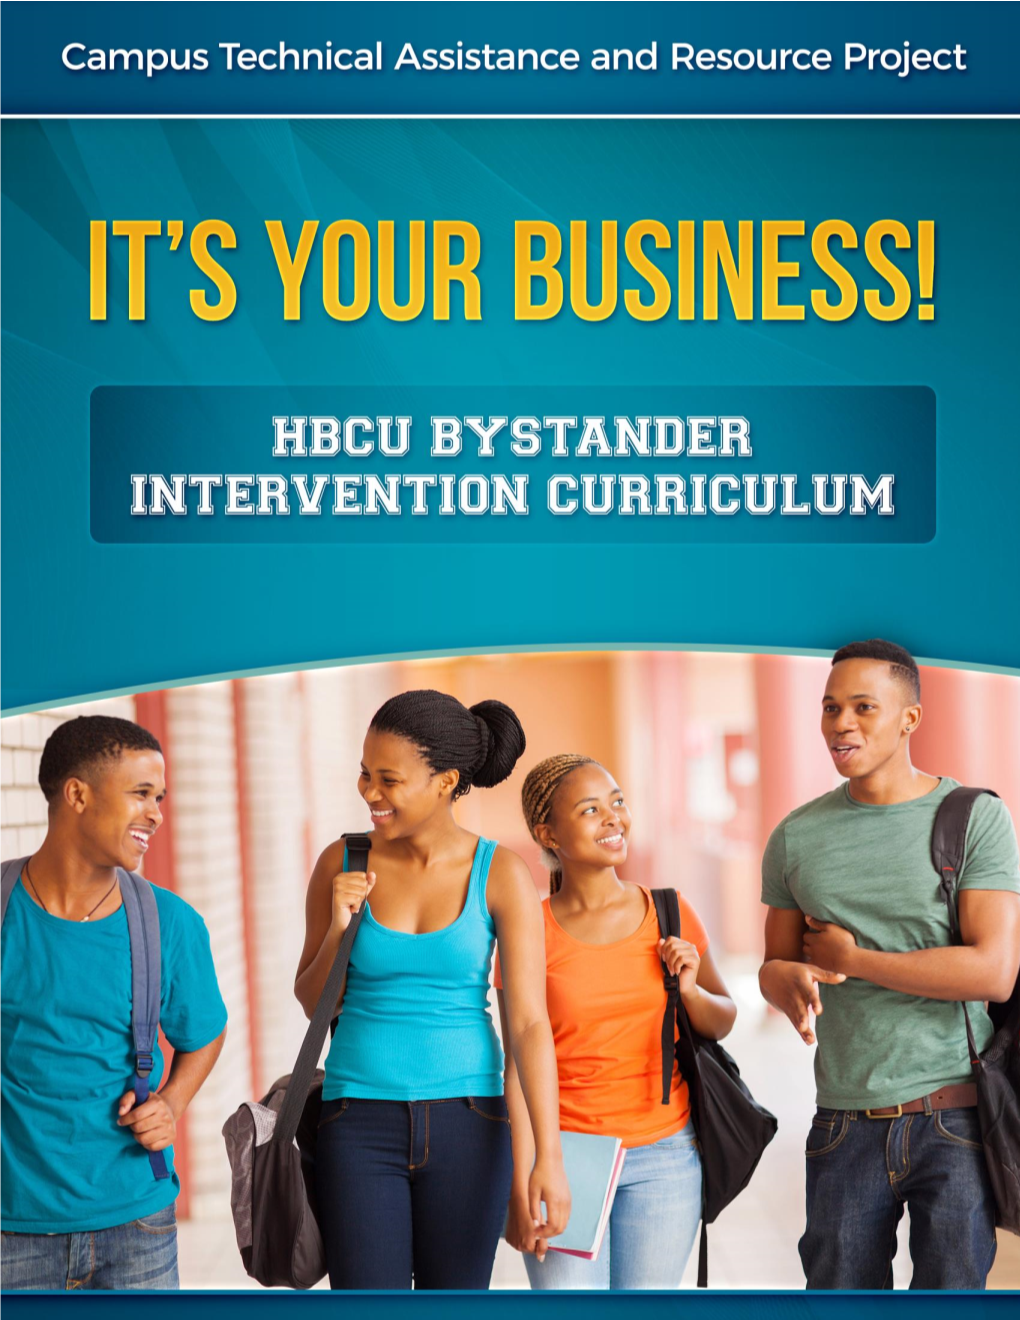 It's Your Business: HBCU Bystander Intervention Curriculum